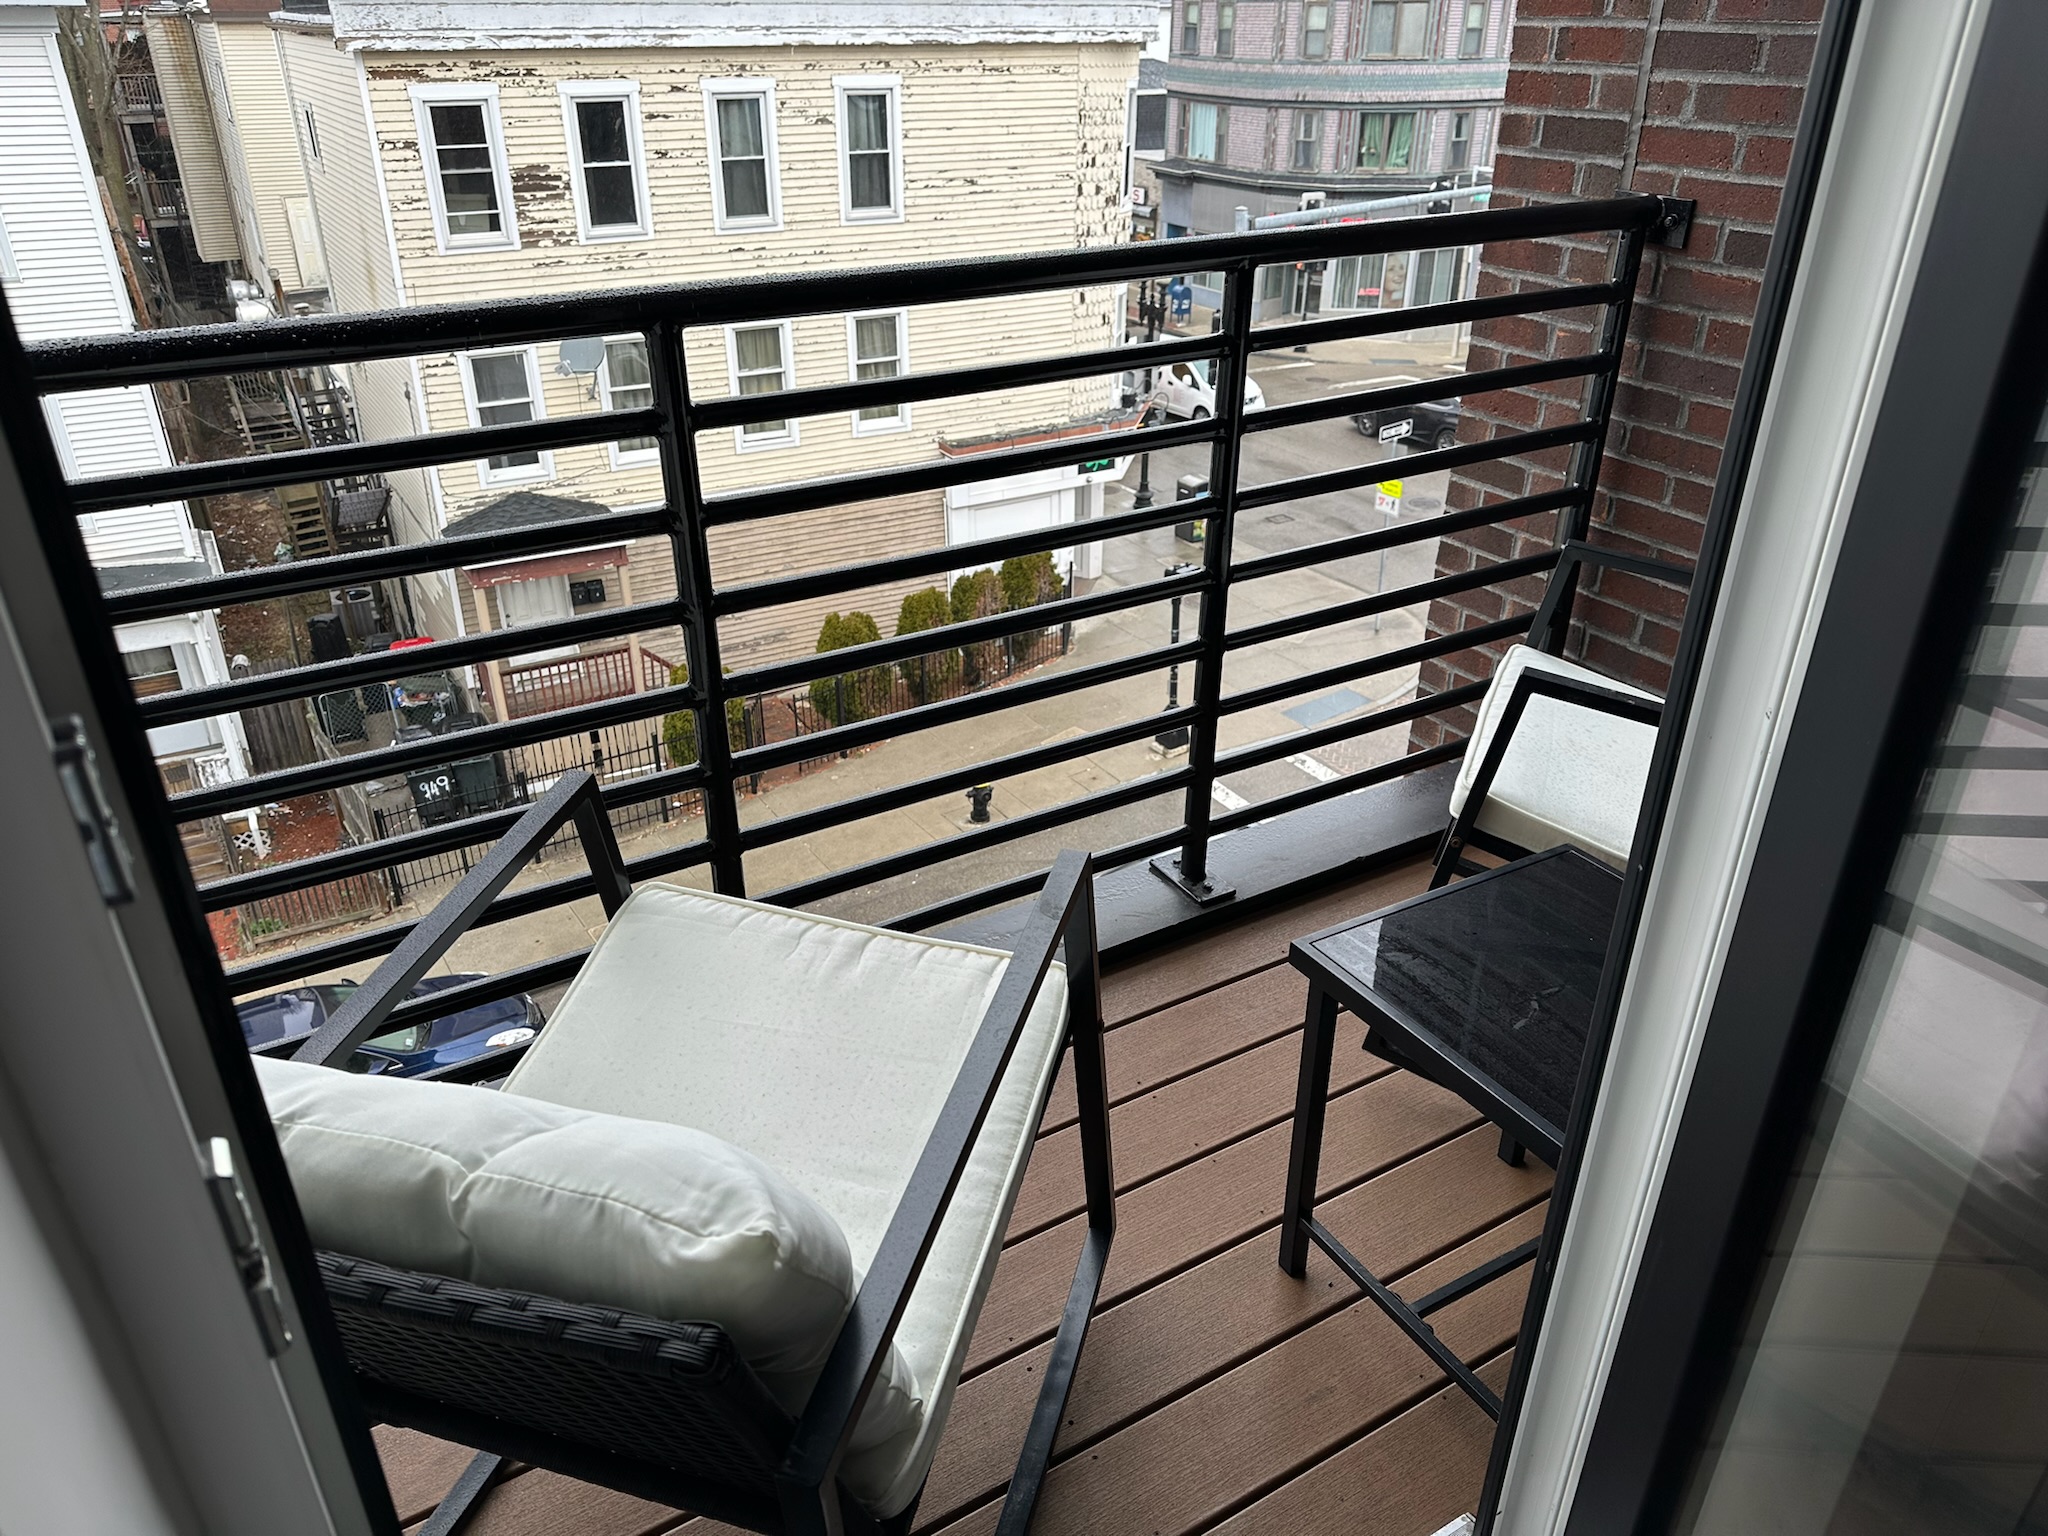 Photos of apartment on Dorchester Ave.,Boston MA 02125